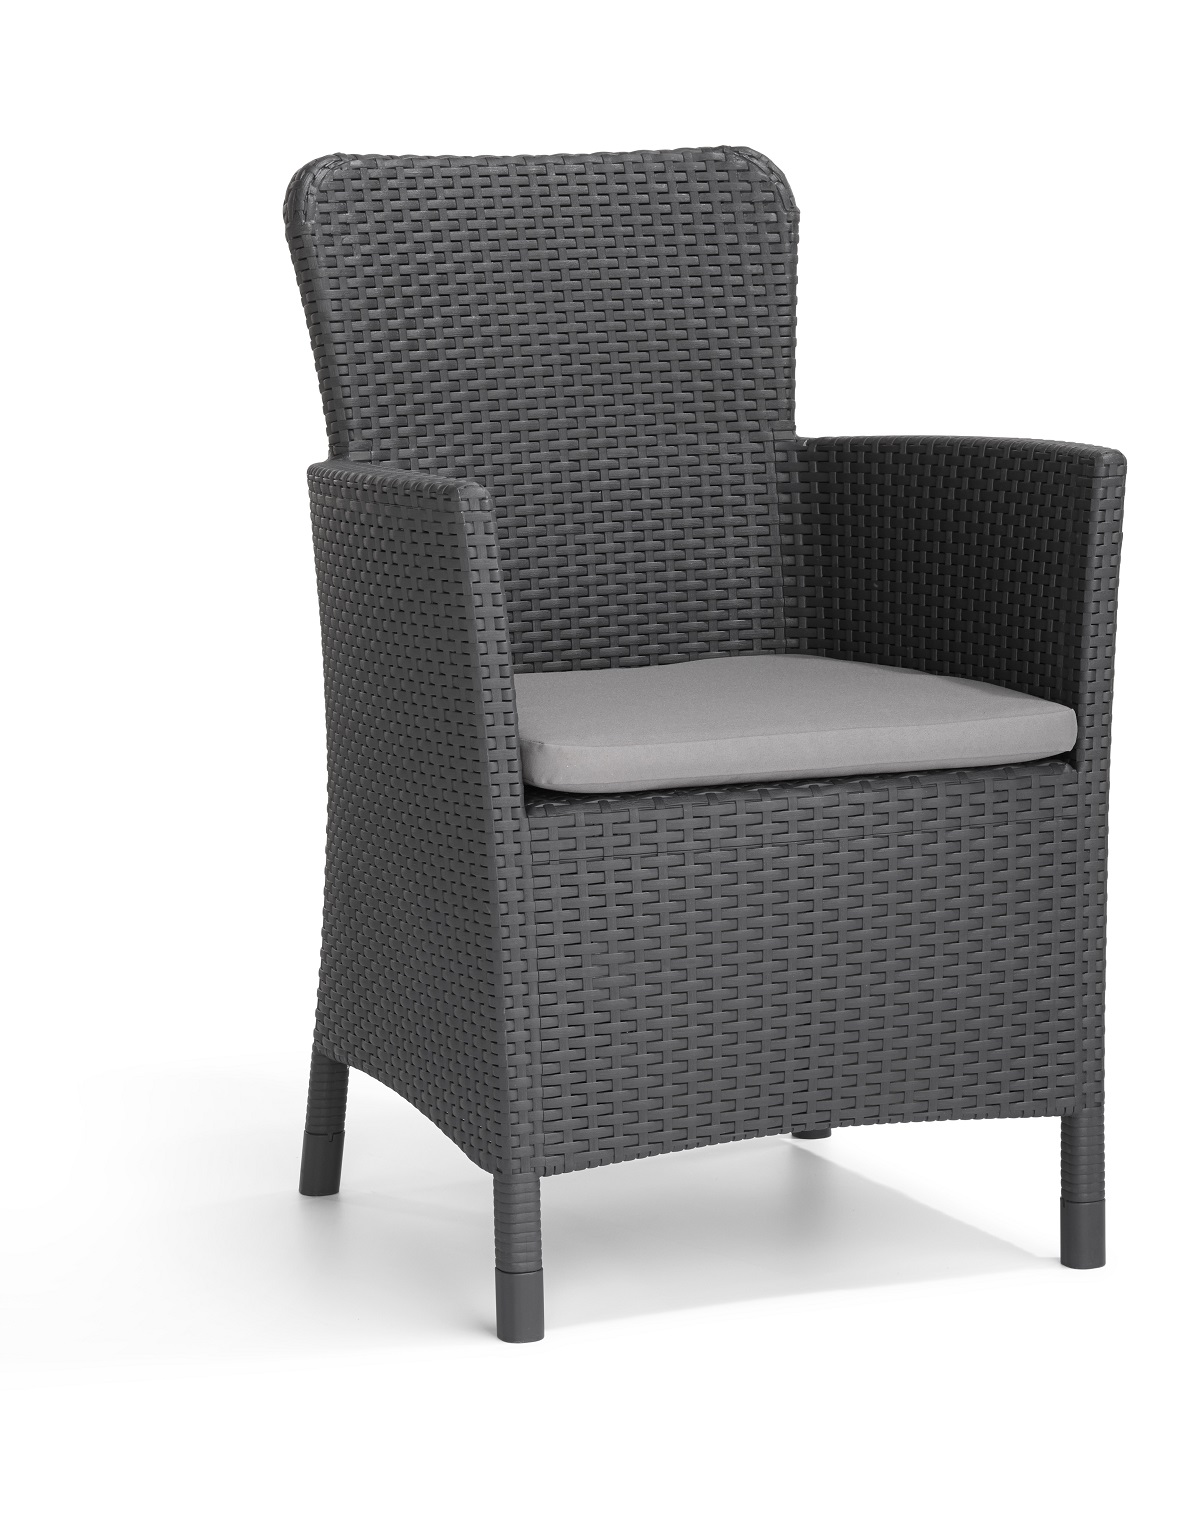 Keter - Miami Garden Chair - Grey (216835)